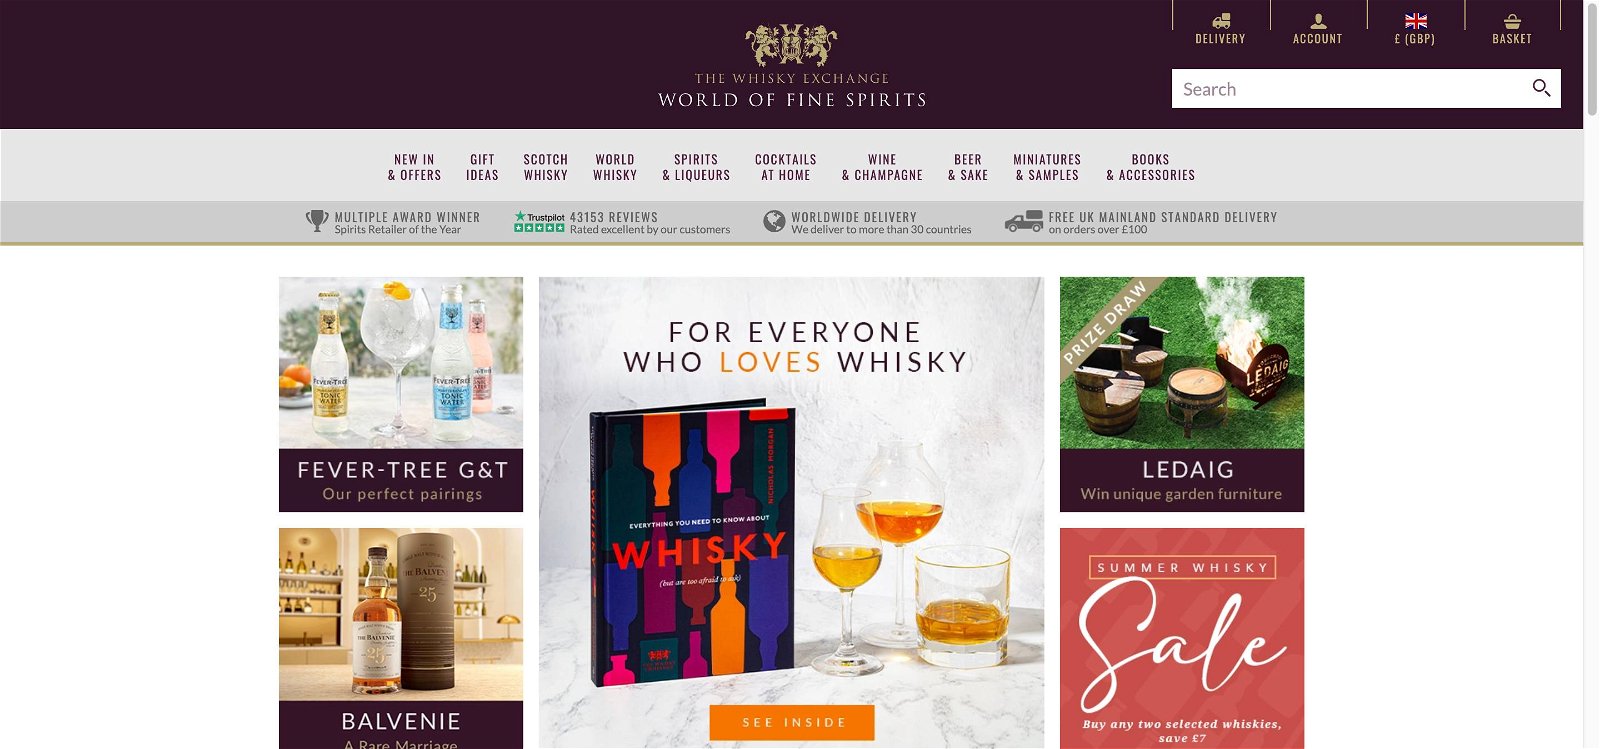 The whisky exchange.com